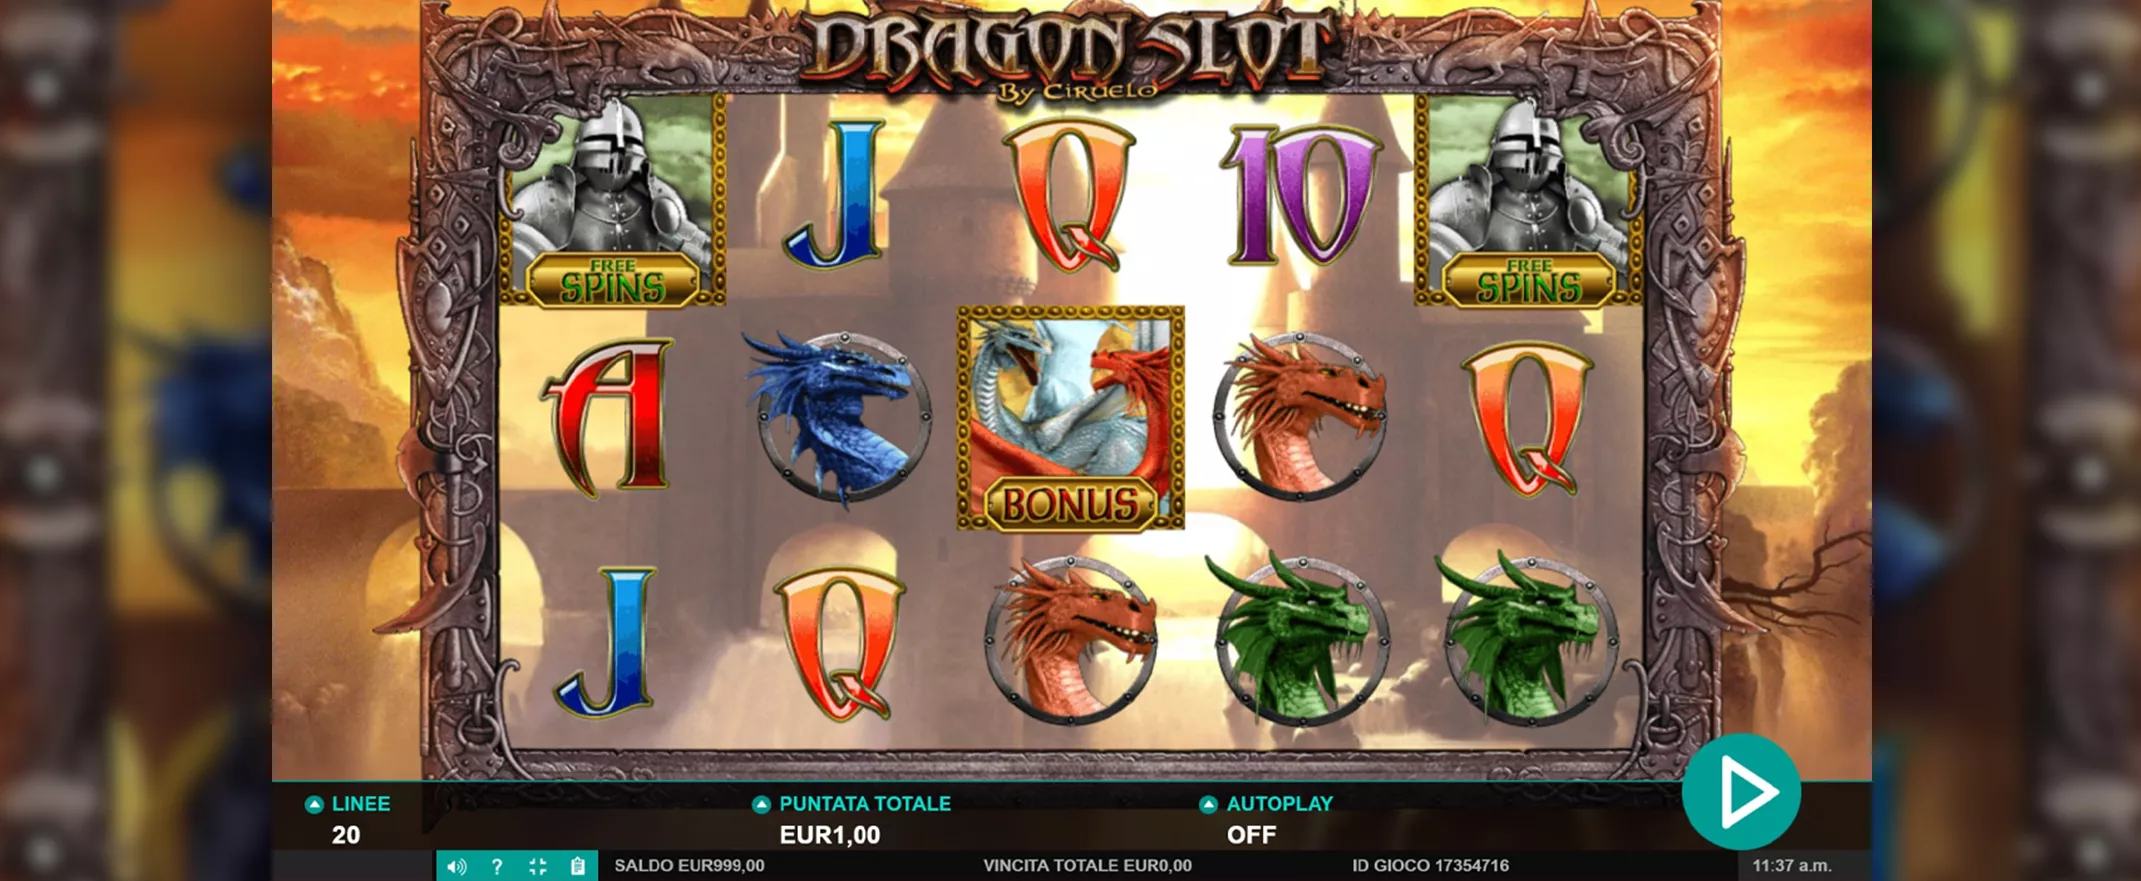 Dragon slot